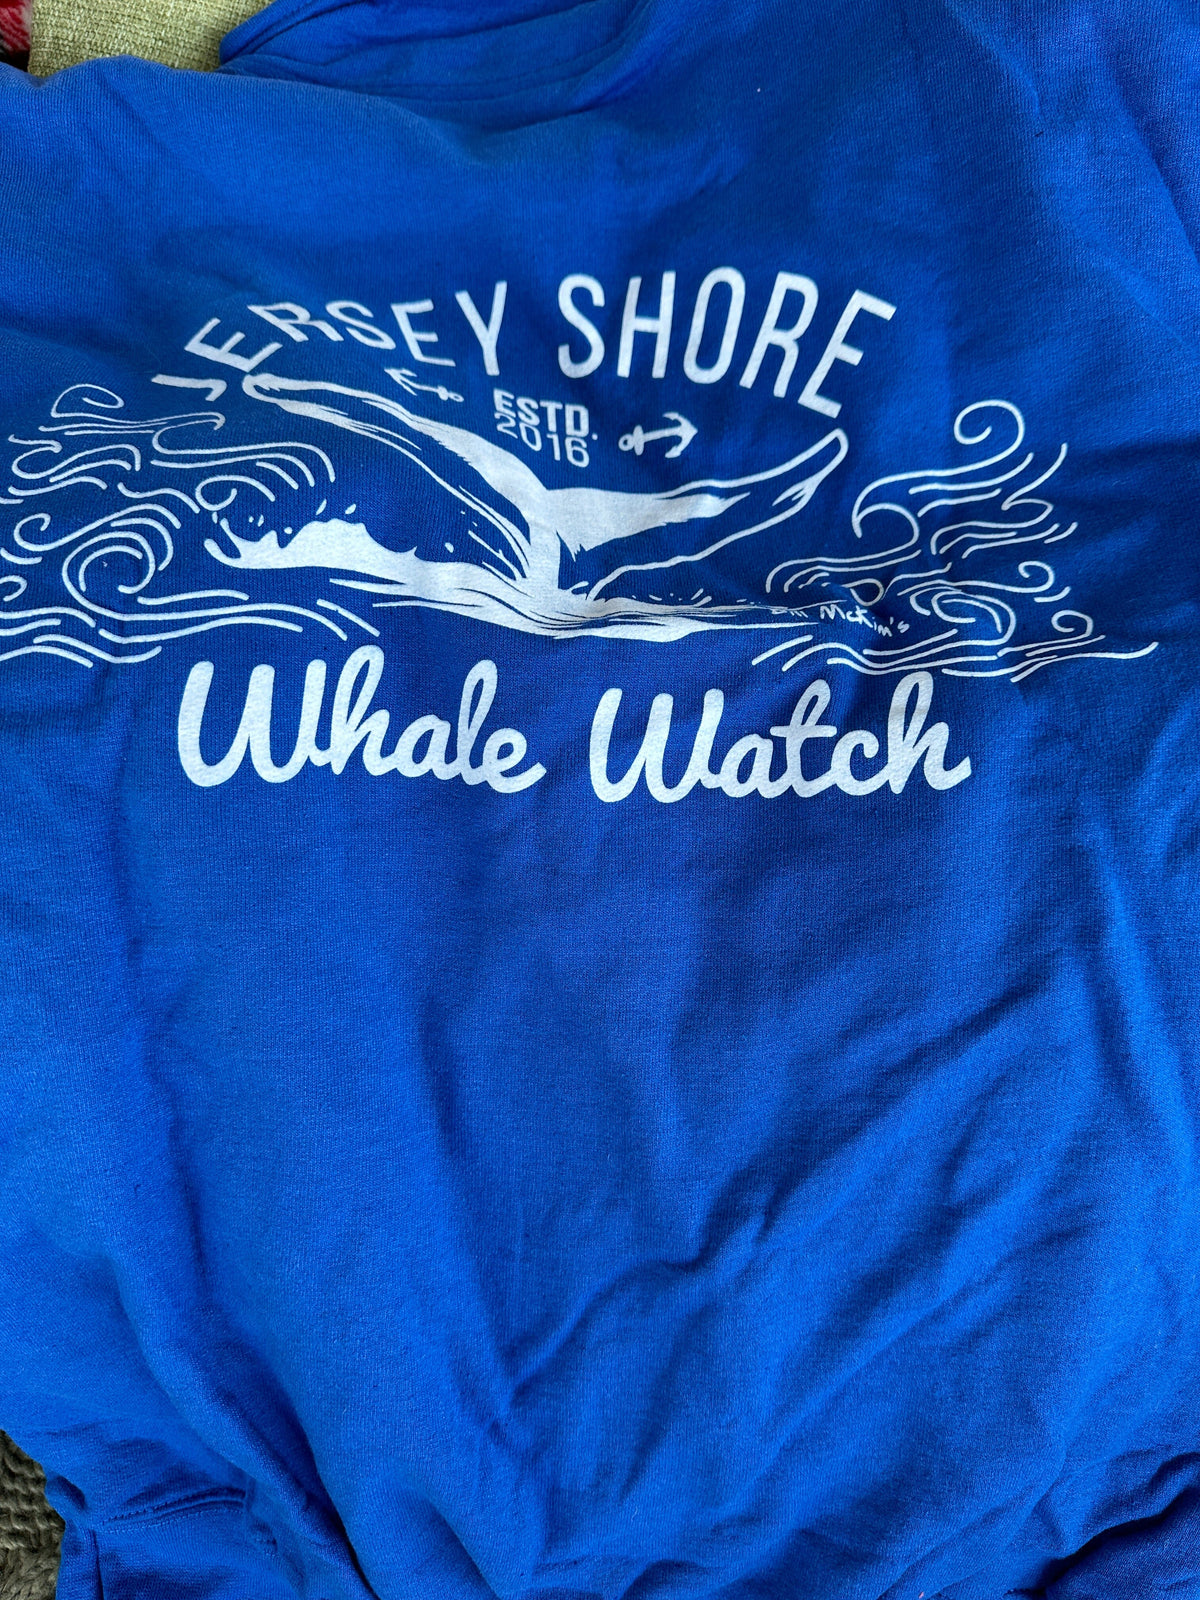 Flash Sale Classic Jersey Shore Whale Watch Sweatshirt printed both sides Bill McKim Photography 